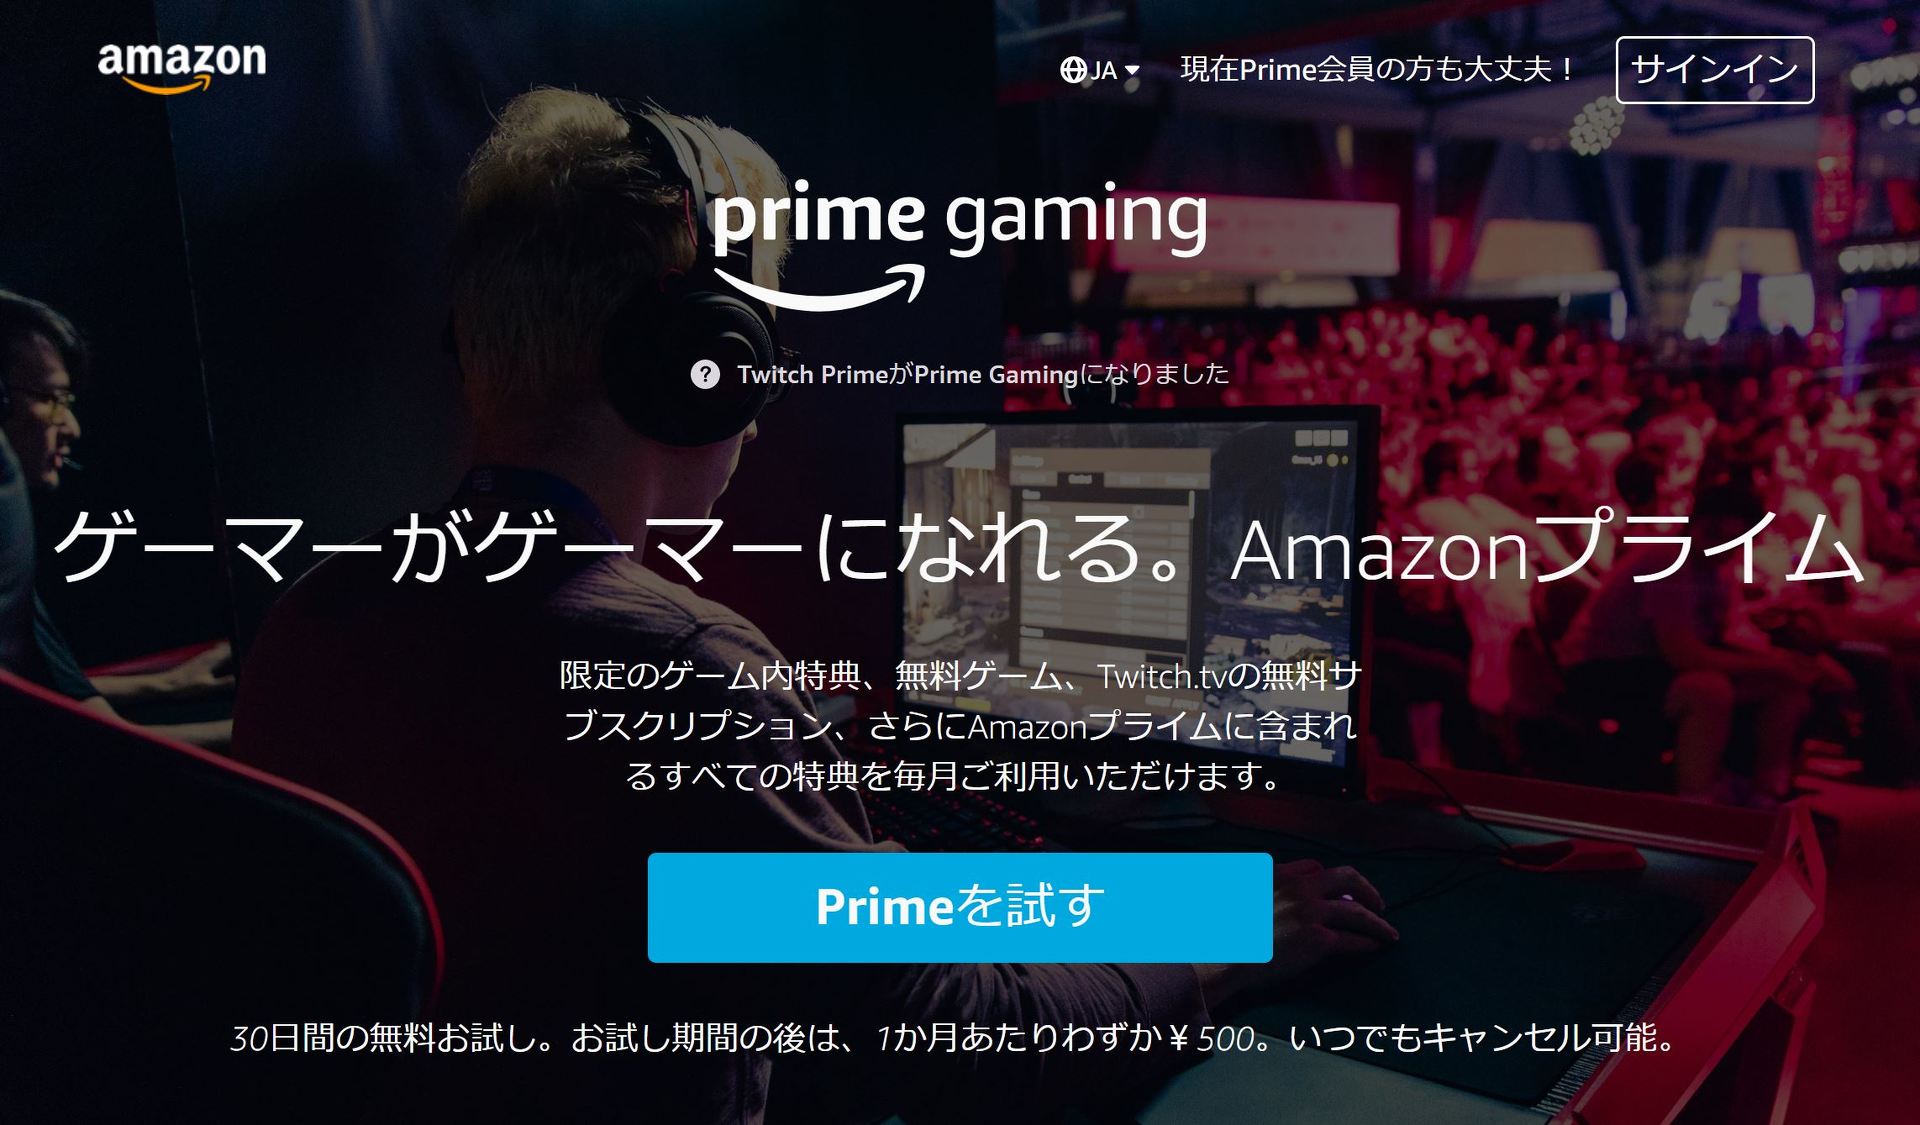 Amazon Twitch Prime を Prime Gaming に改称 Gamerzclip